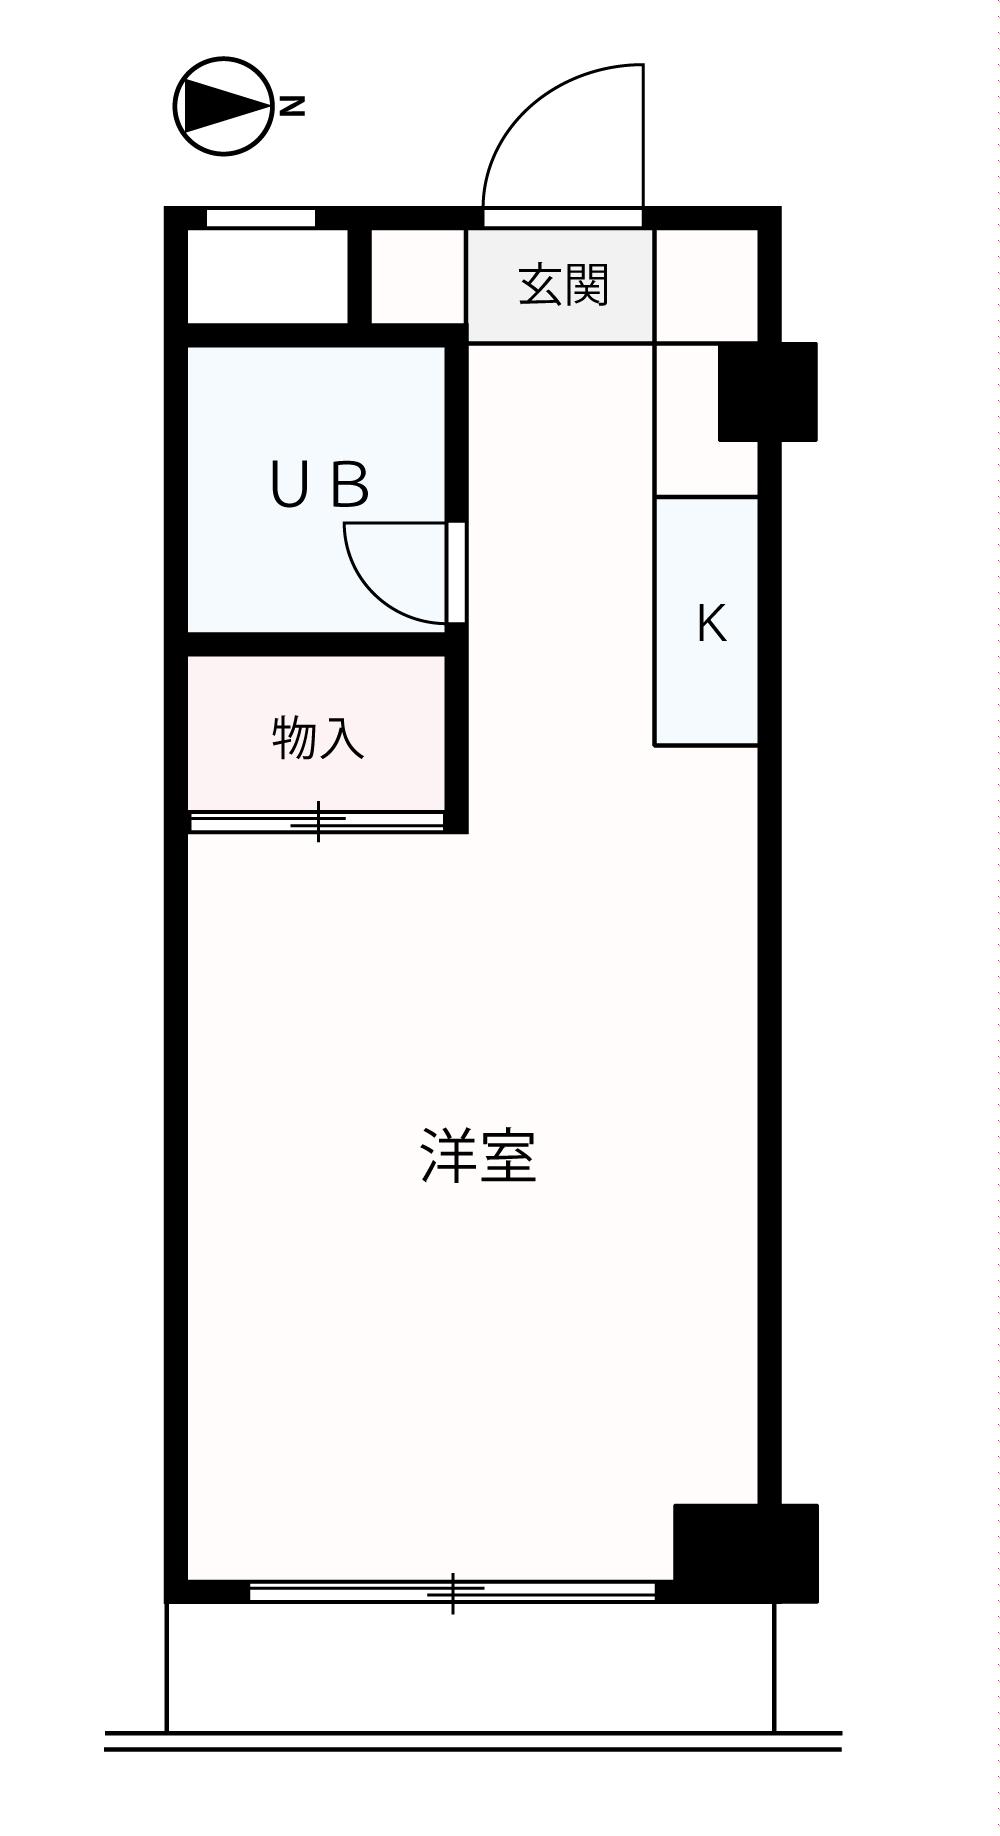 Floor plan. Price 2.3 million yen, Occupied area 20.16 sq m